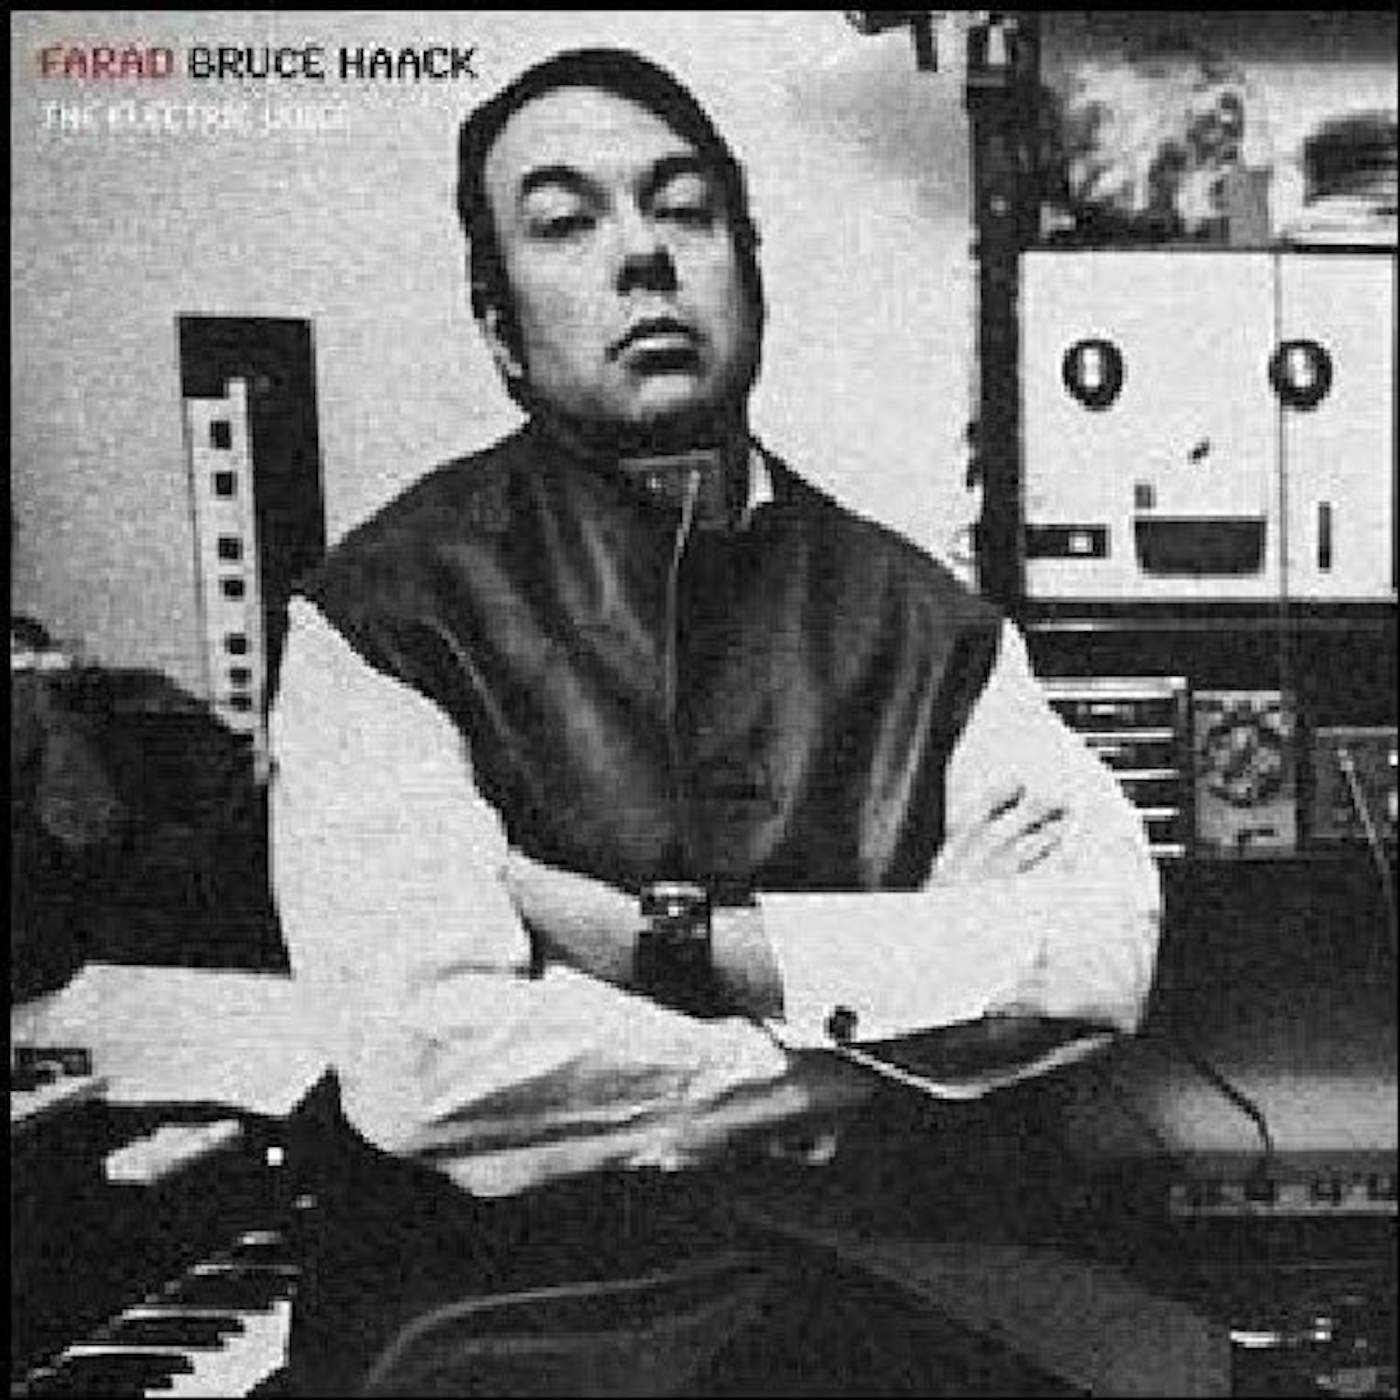 Bruce Haack FARAD THE ELECTRIC VOICE Vinyl Record